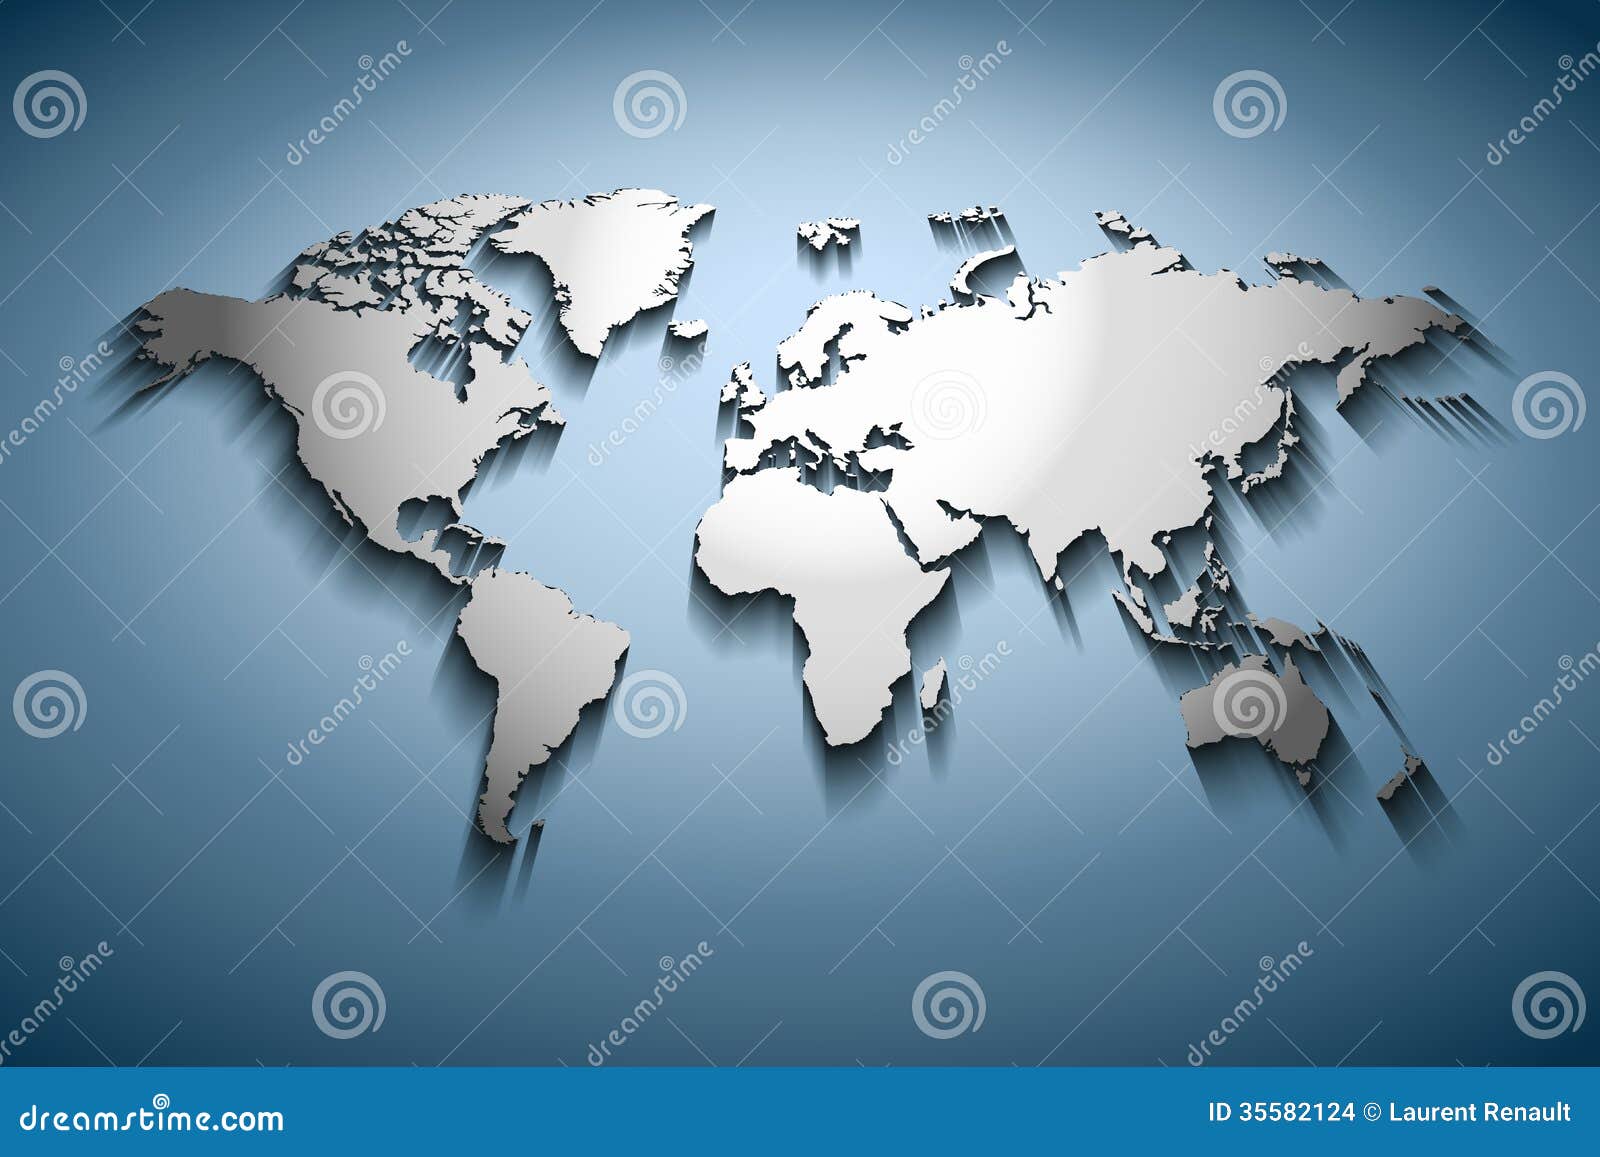 world map embossed